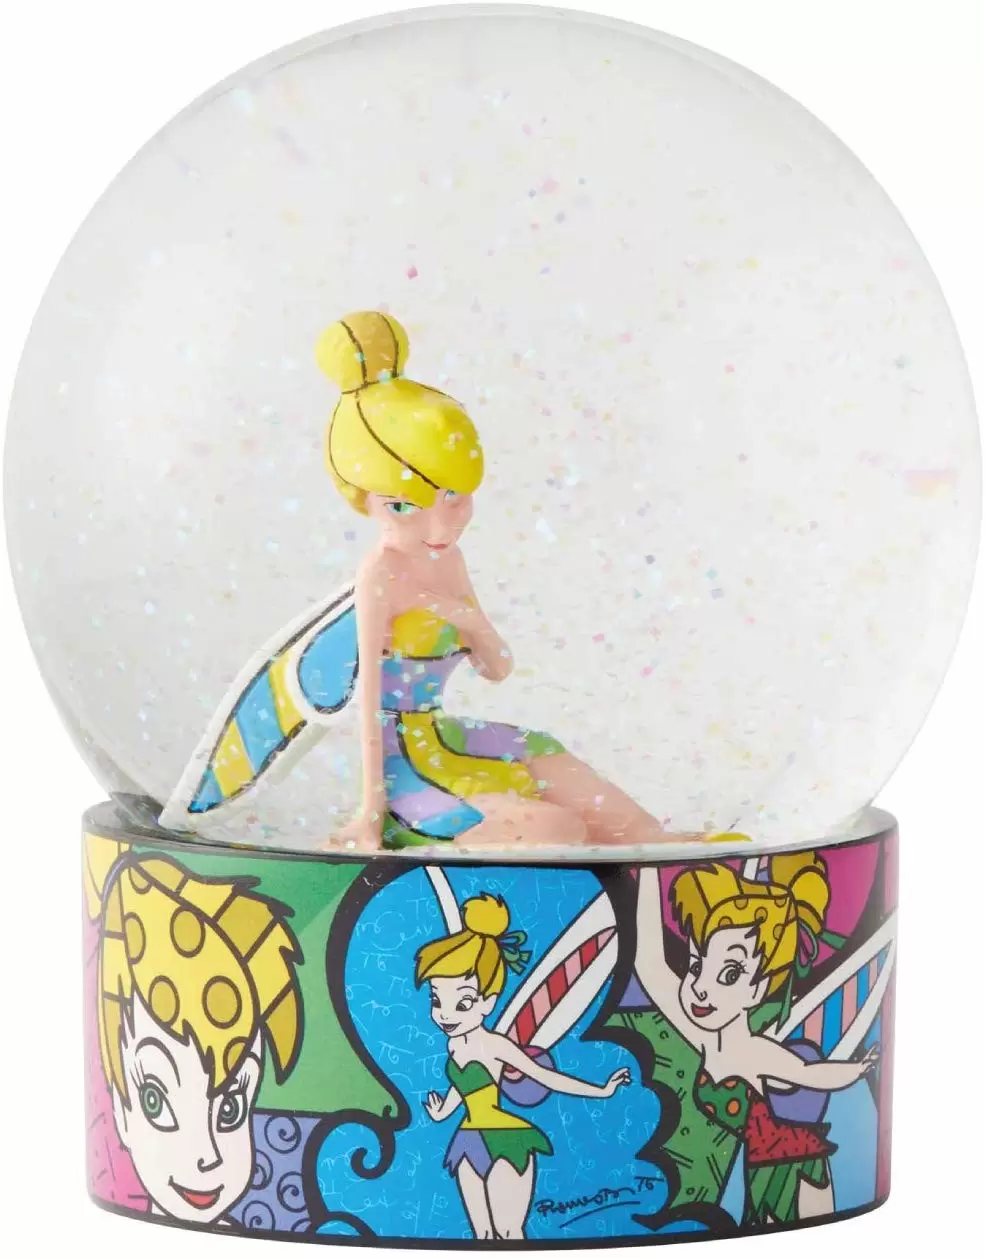 Disney Romero Britto TINKERBELL 3D Pop Art Block Tink 4033868 NEW 